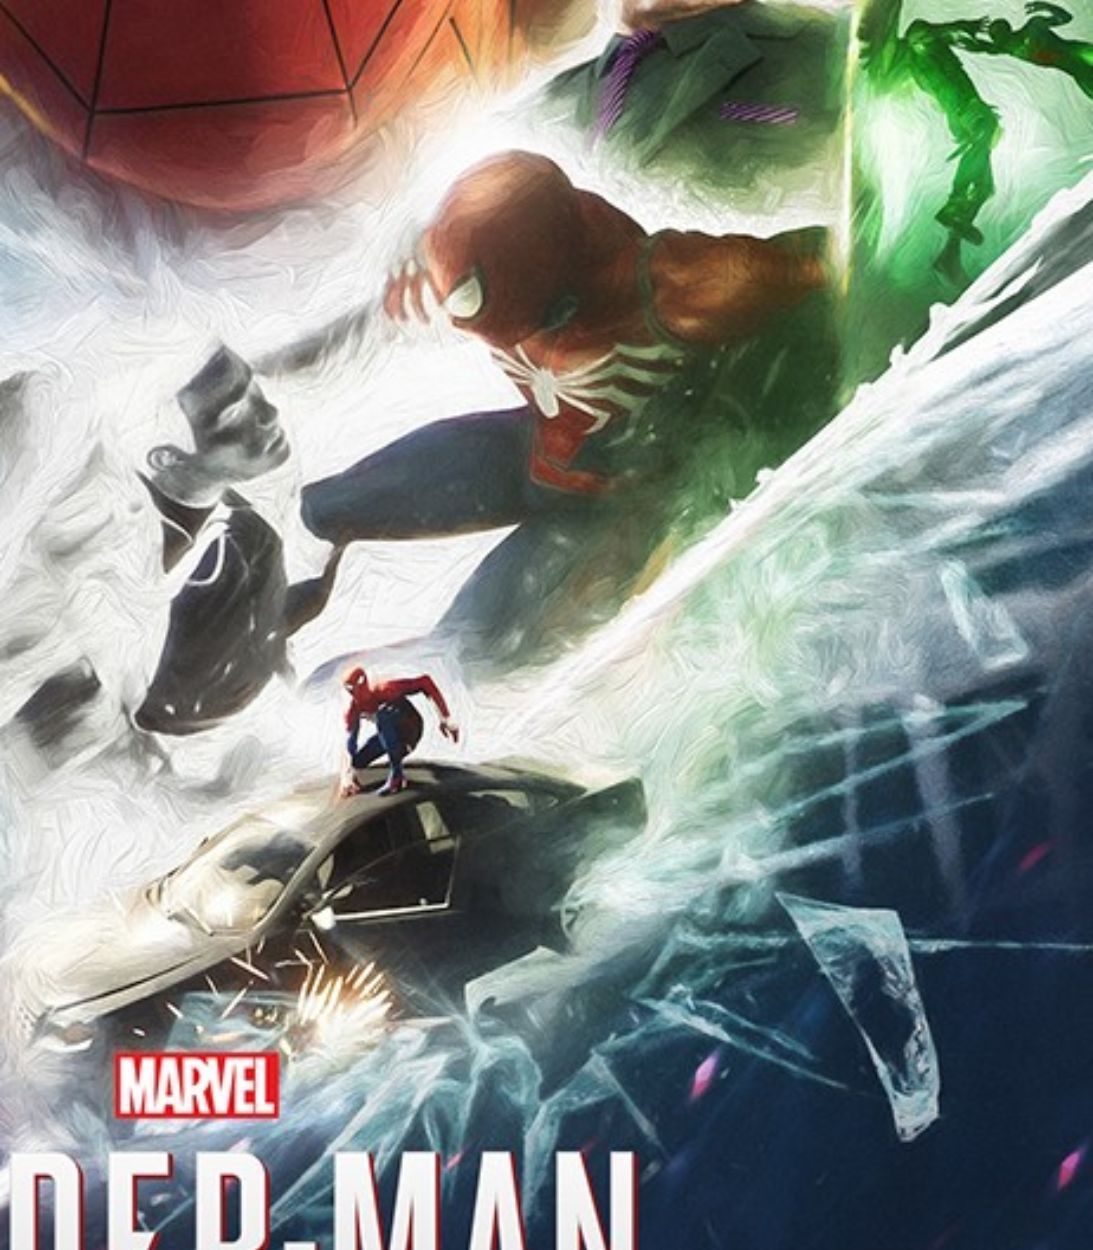 marvels spiderman fan poster bottom right vertical